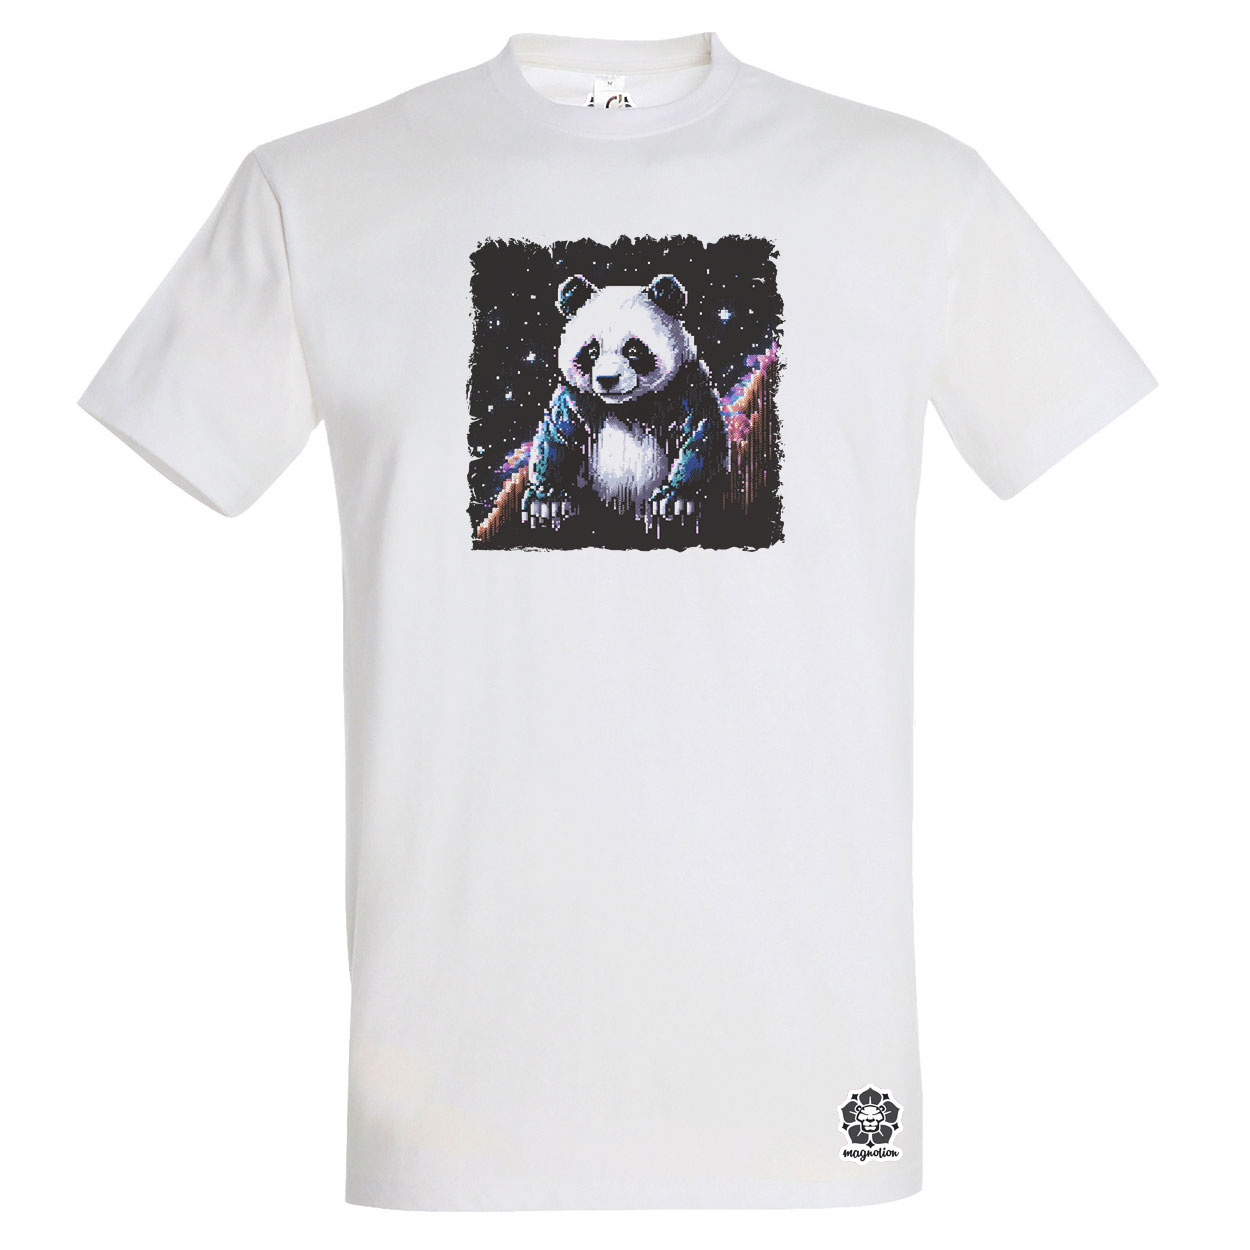 Pixelart Panda Galaxisban v1